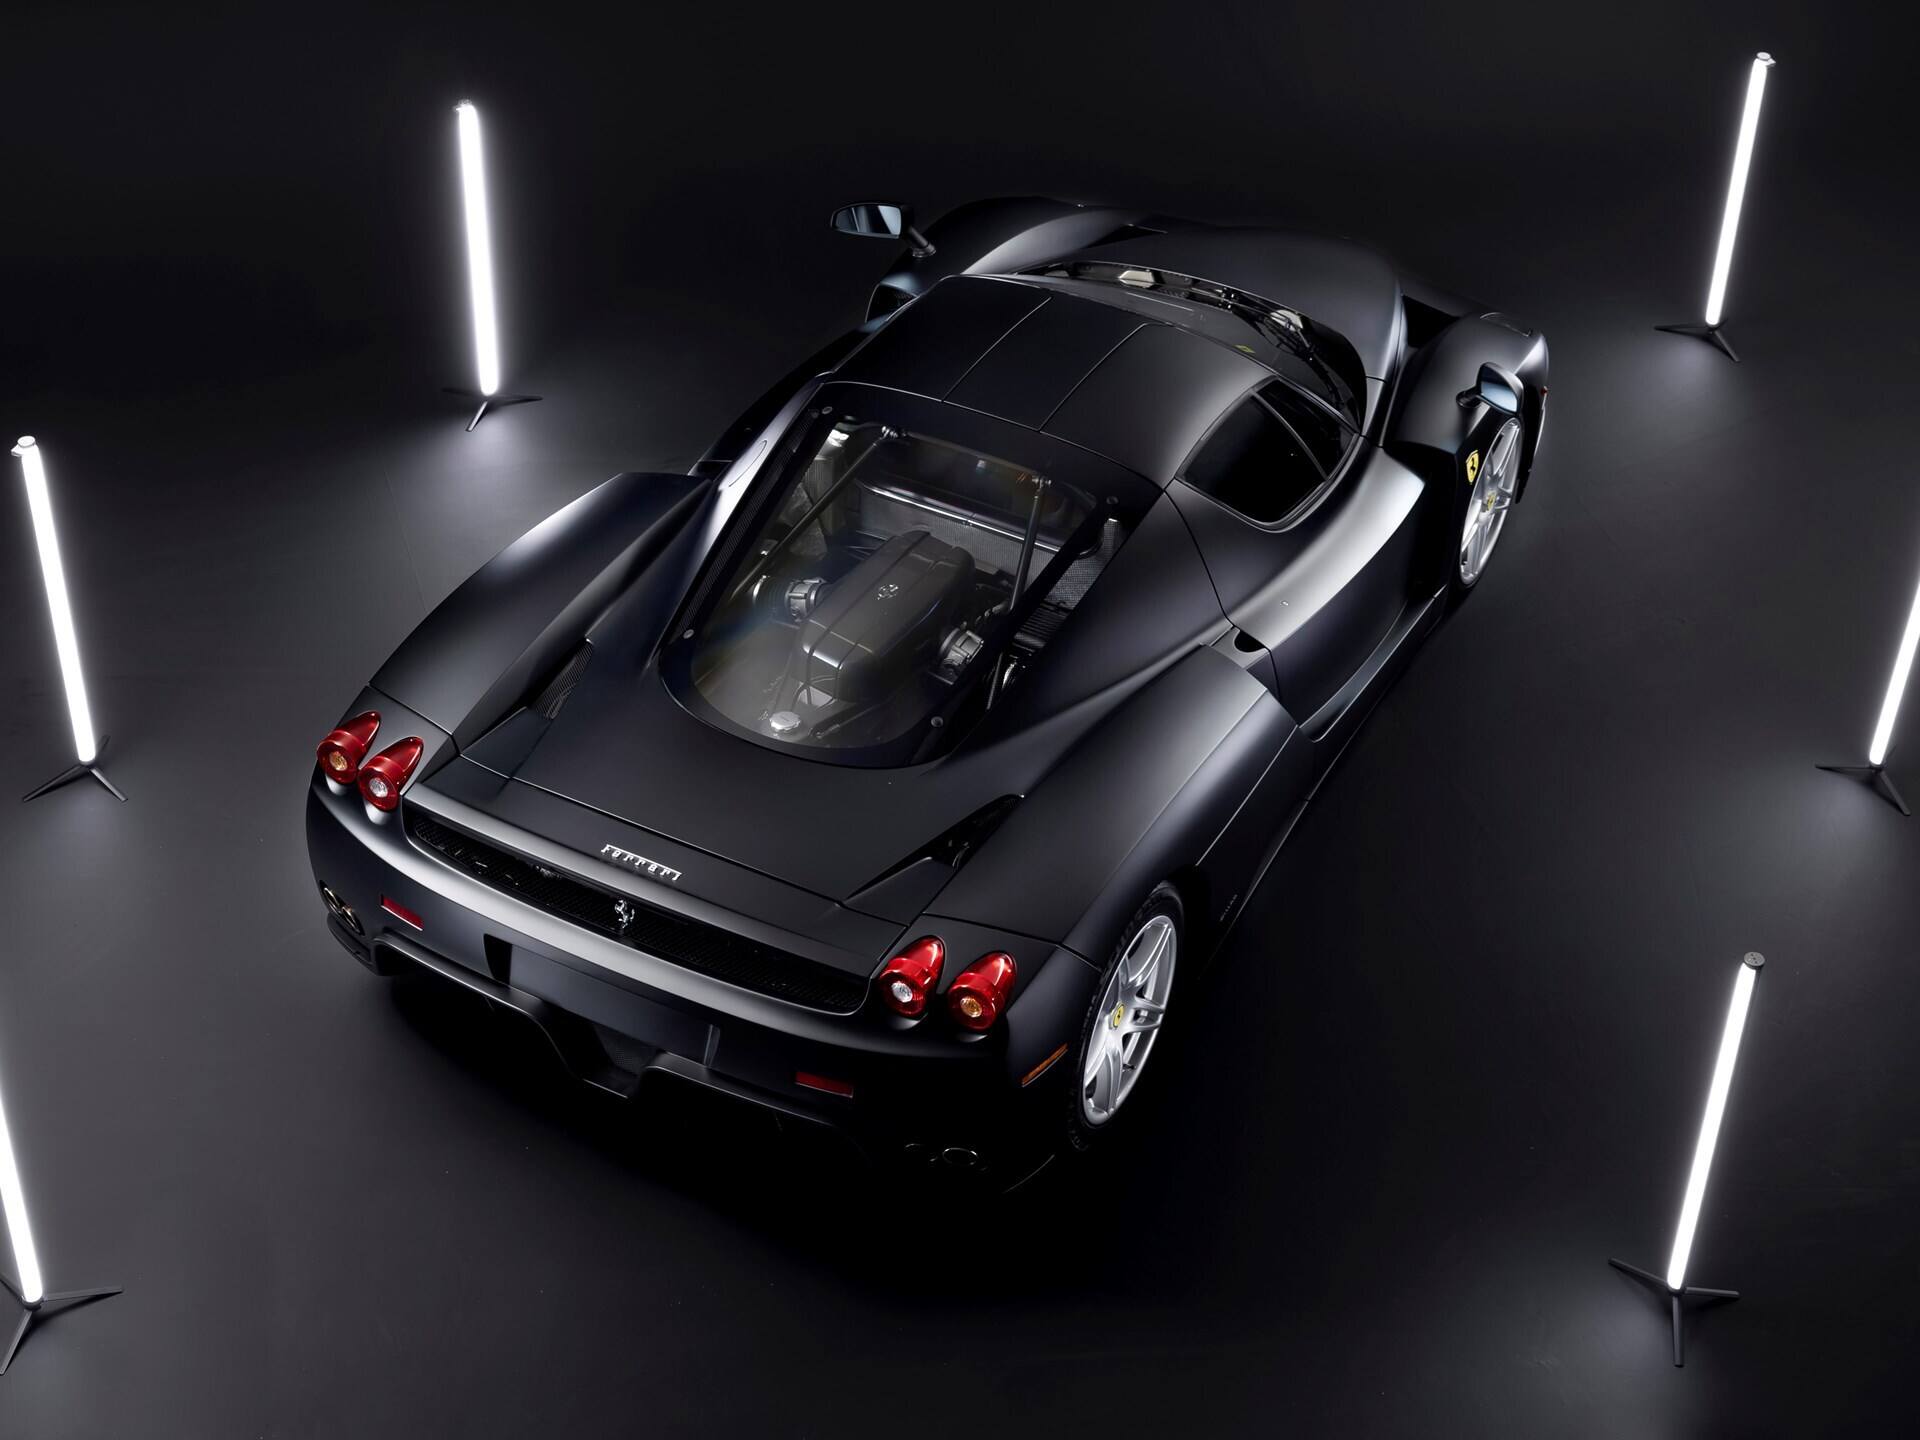 imagen 12 de Sale a subasta un Ferrari Enzo negro mate único excepcional.